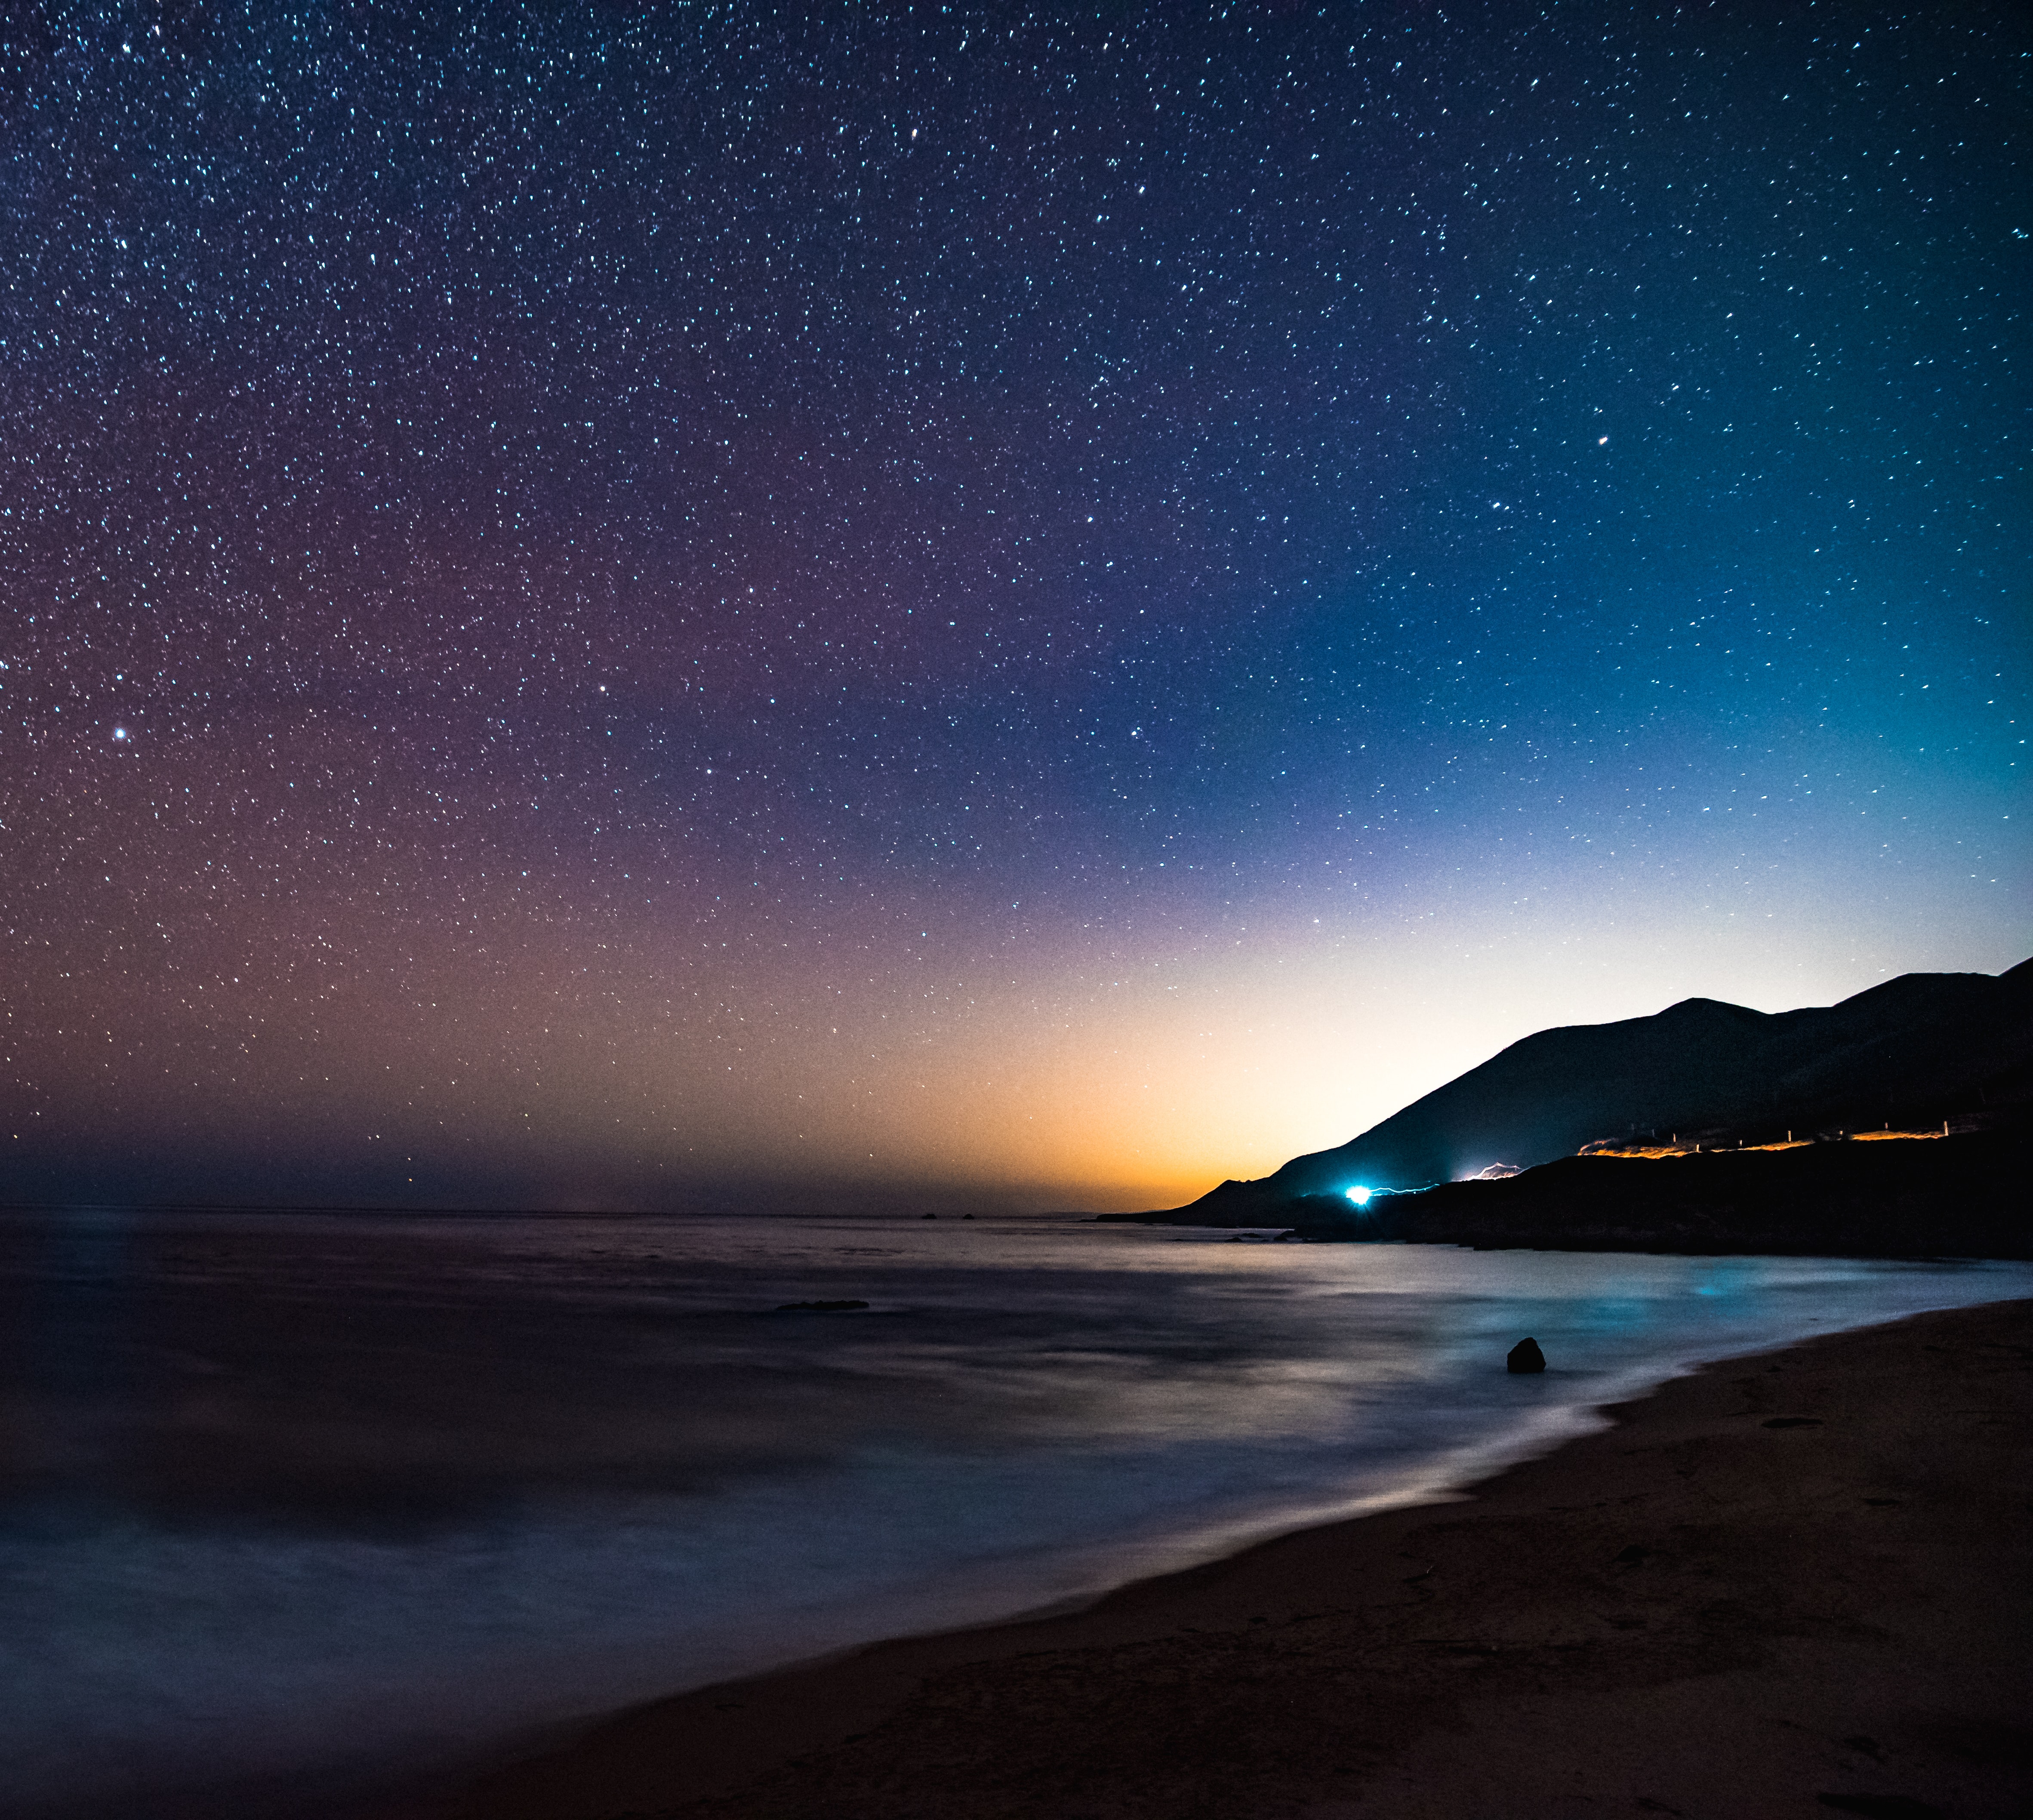 Ocean and night sky